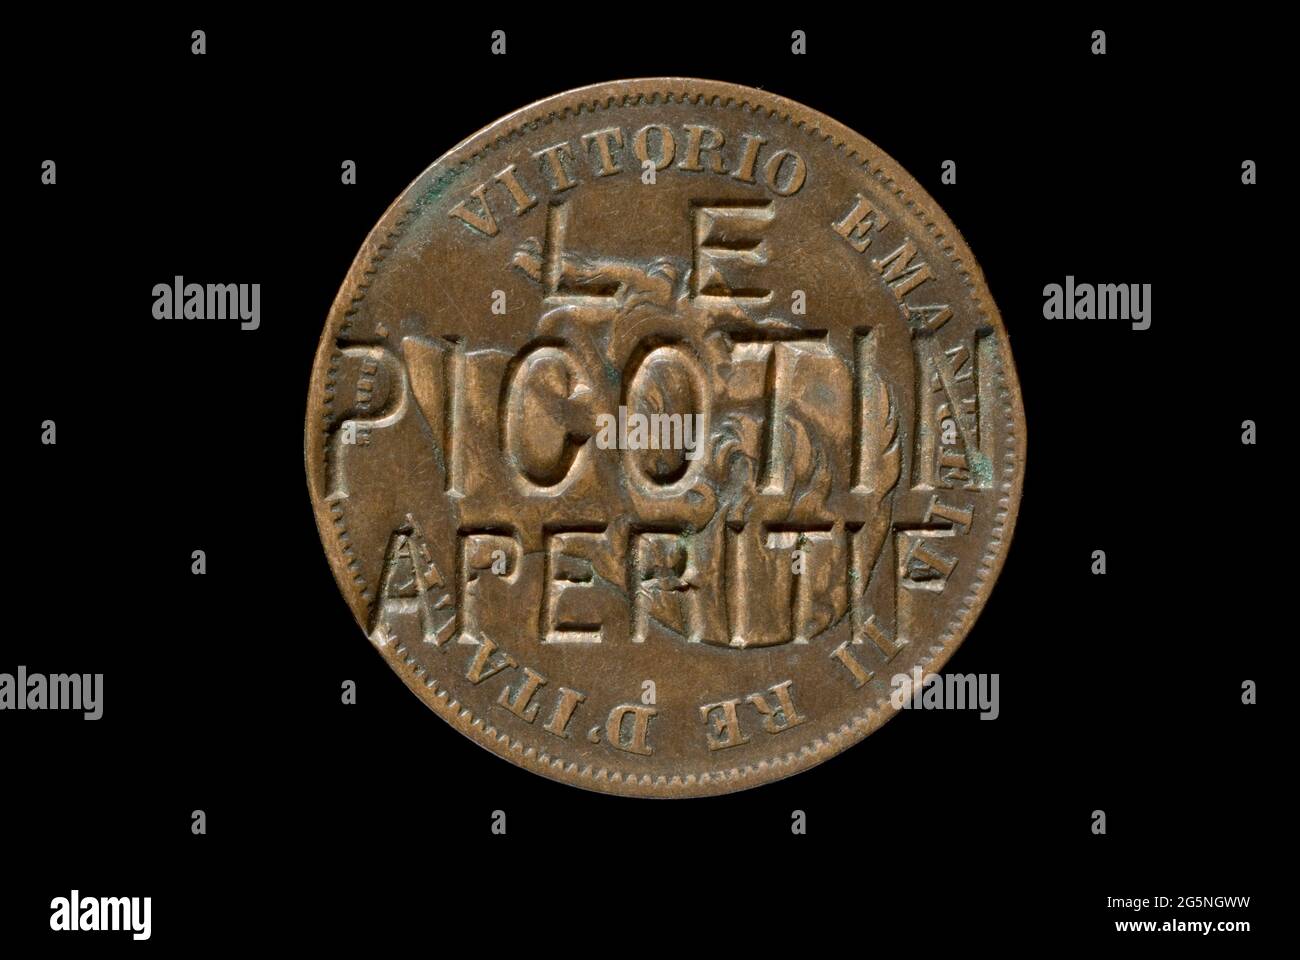 Le Picotin aperitif advertising token Stock Photo